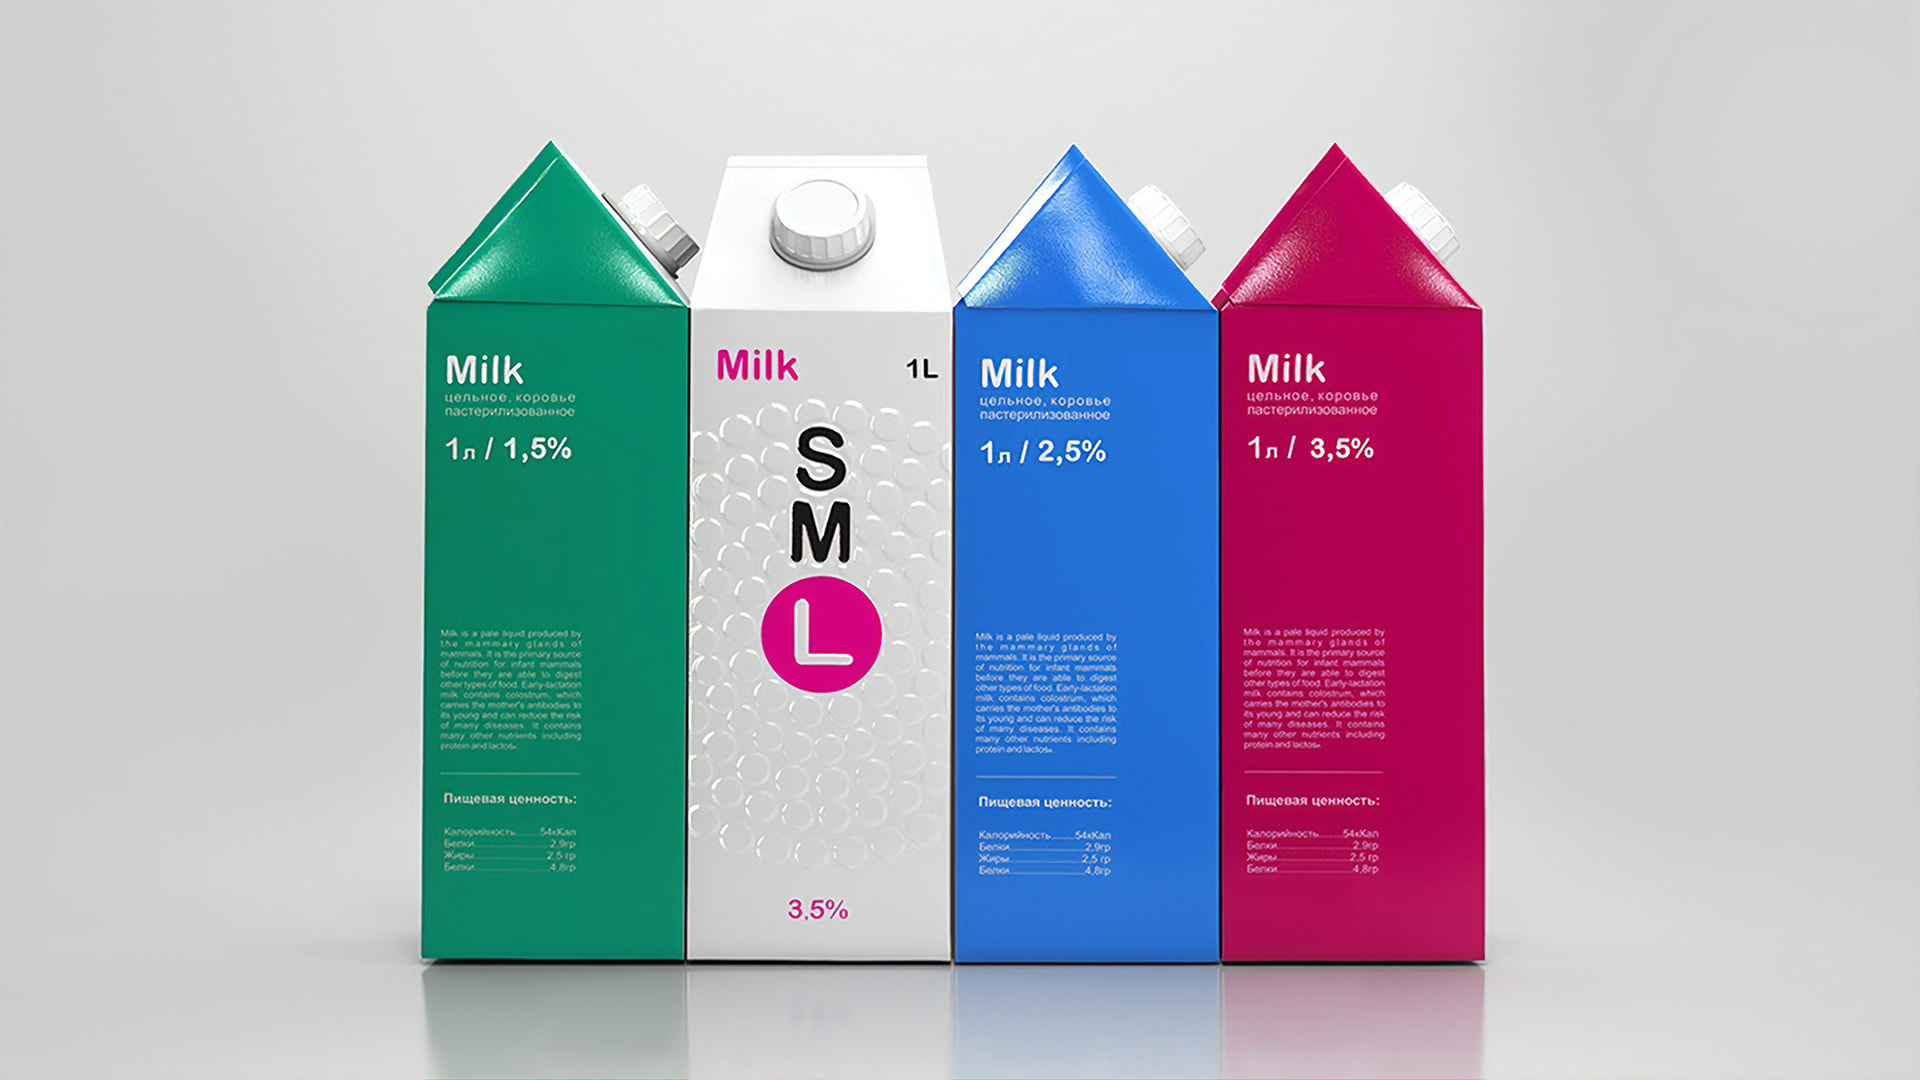 SML milk image